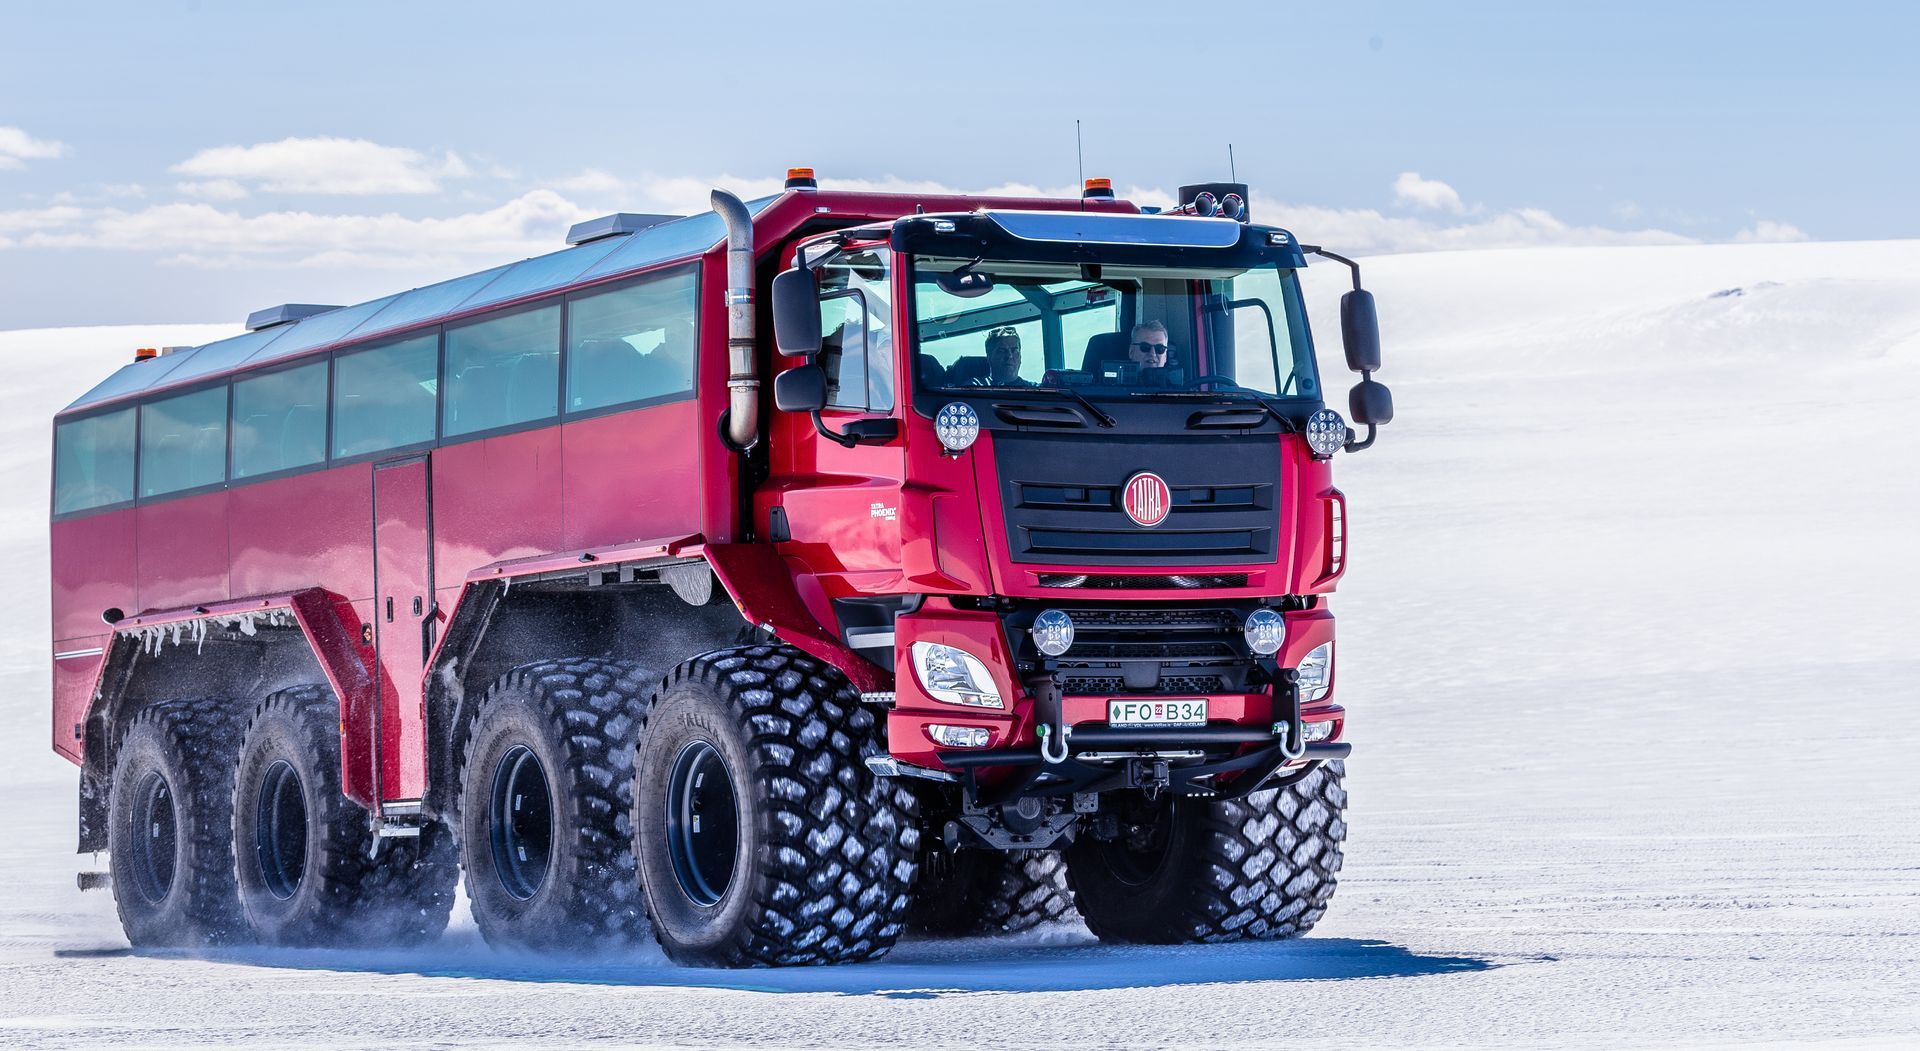 sleipnir2-tatra-monster-truck-bus-iceland